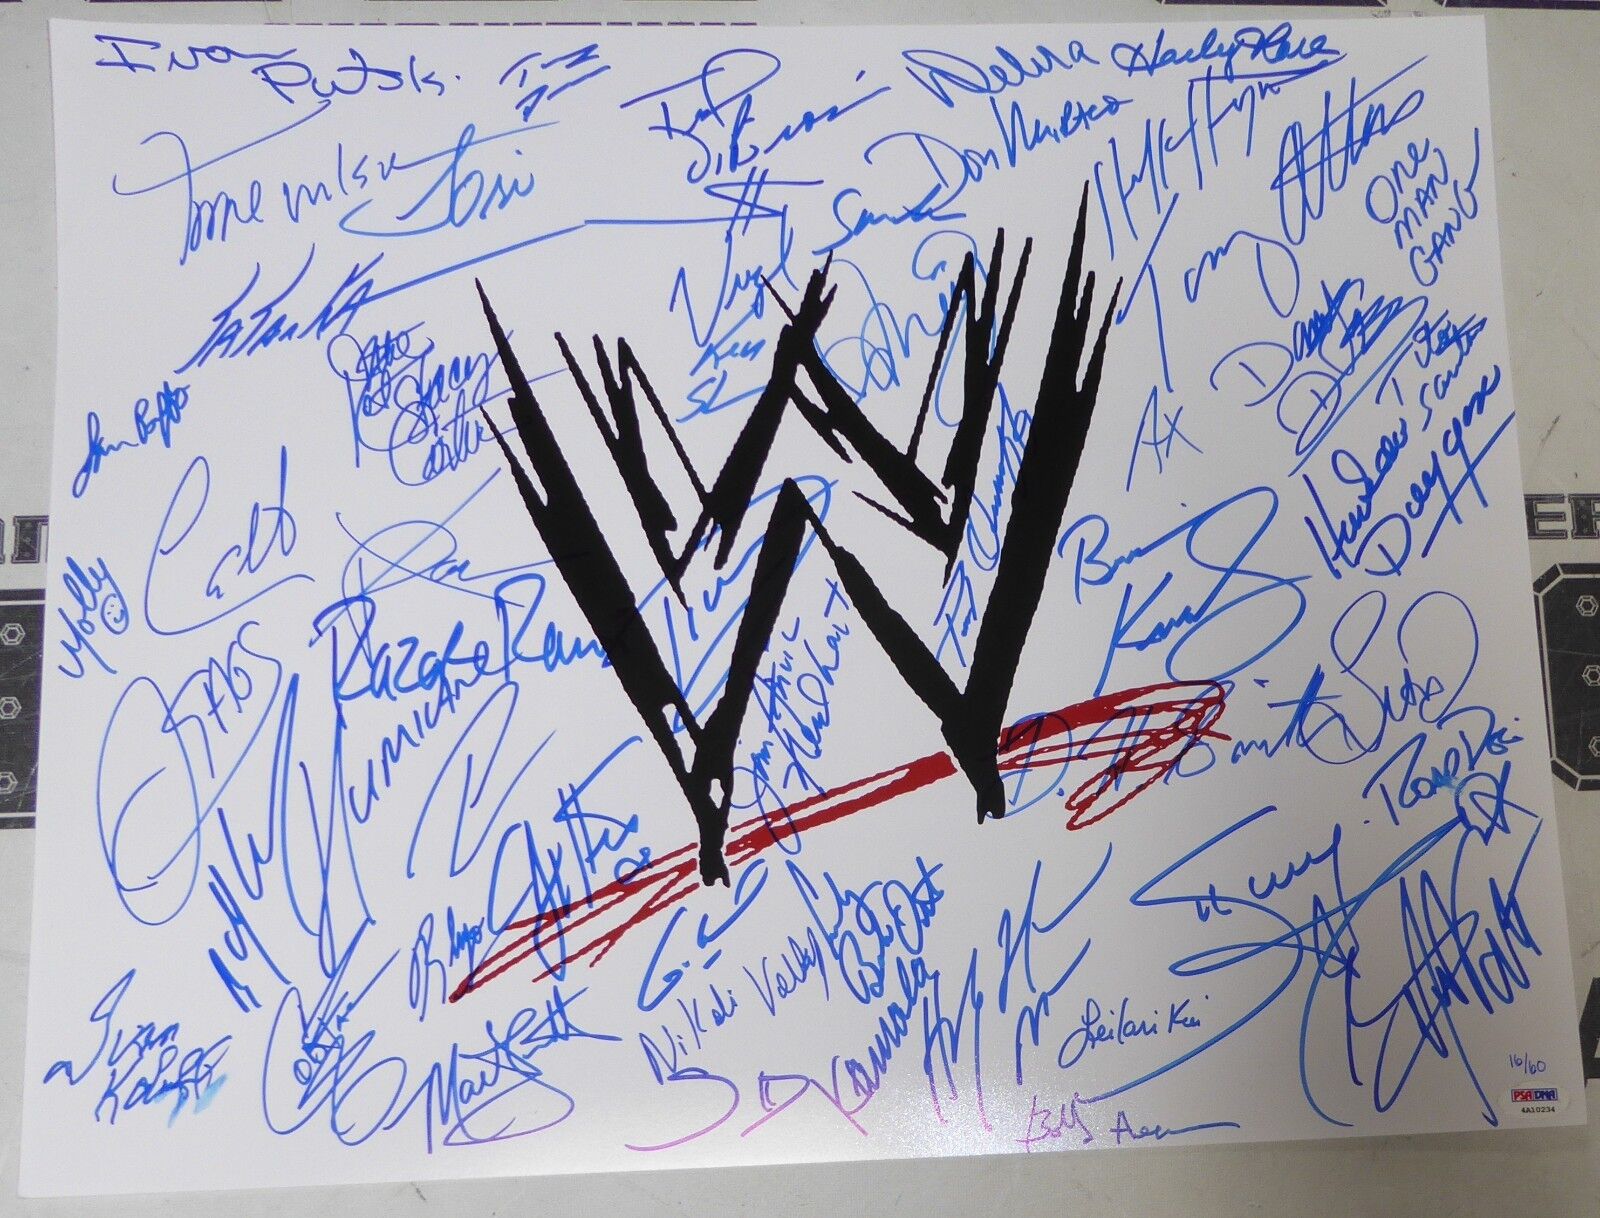 Hulk Hogan Razor Ramon Lita X-Pac Sunny +46 WWE Stars Signed 16x20 Photo Poster painting PSA/DNA